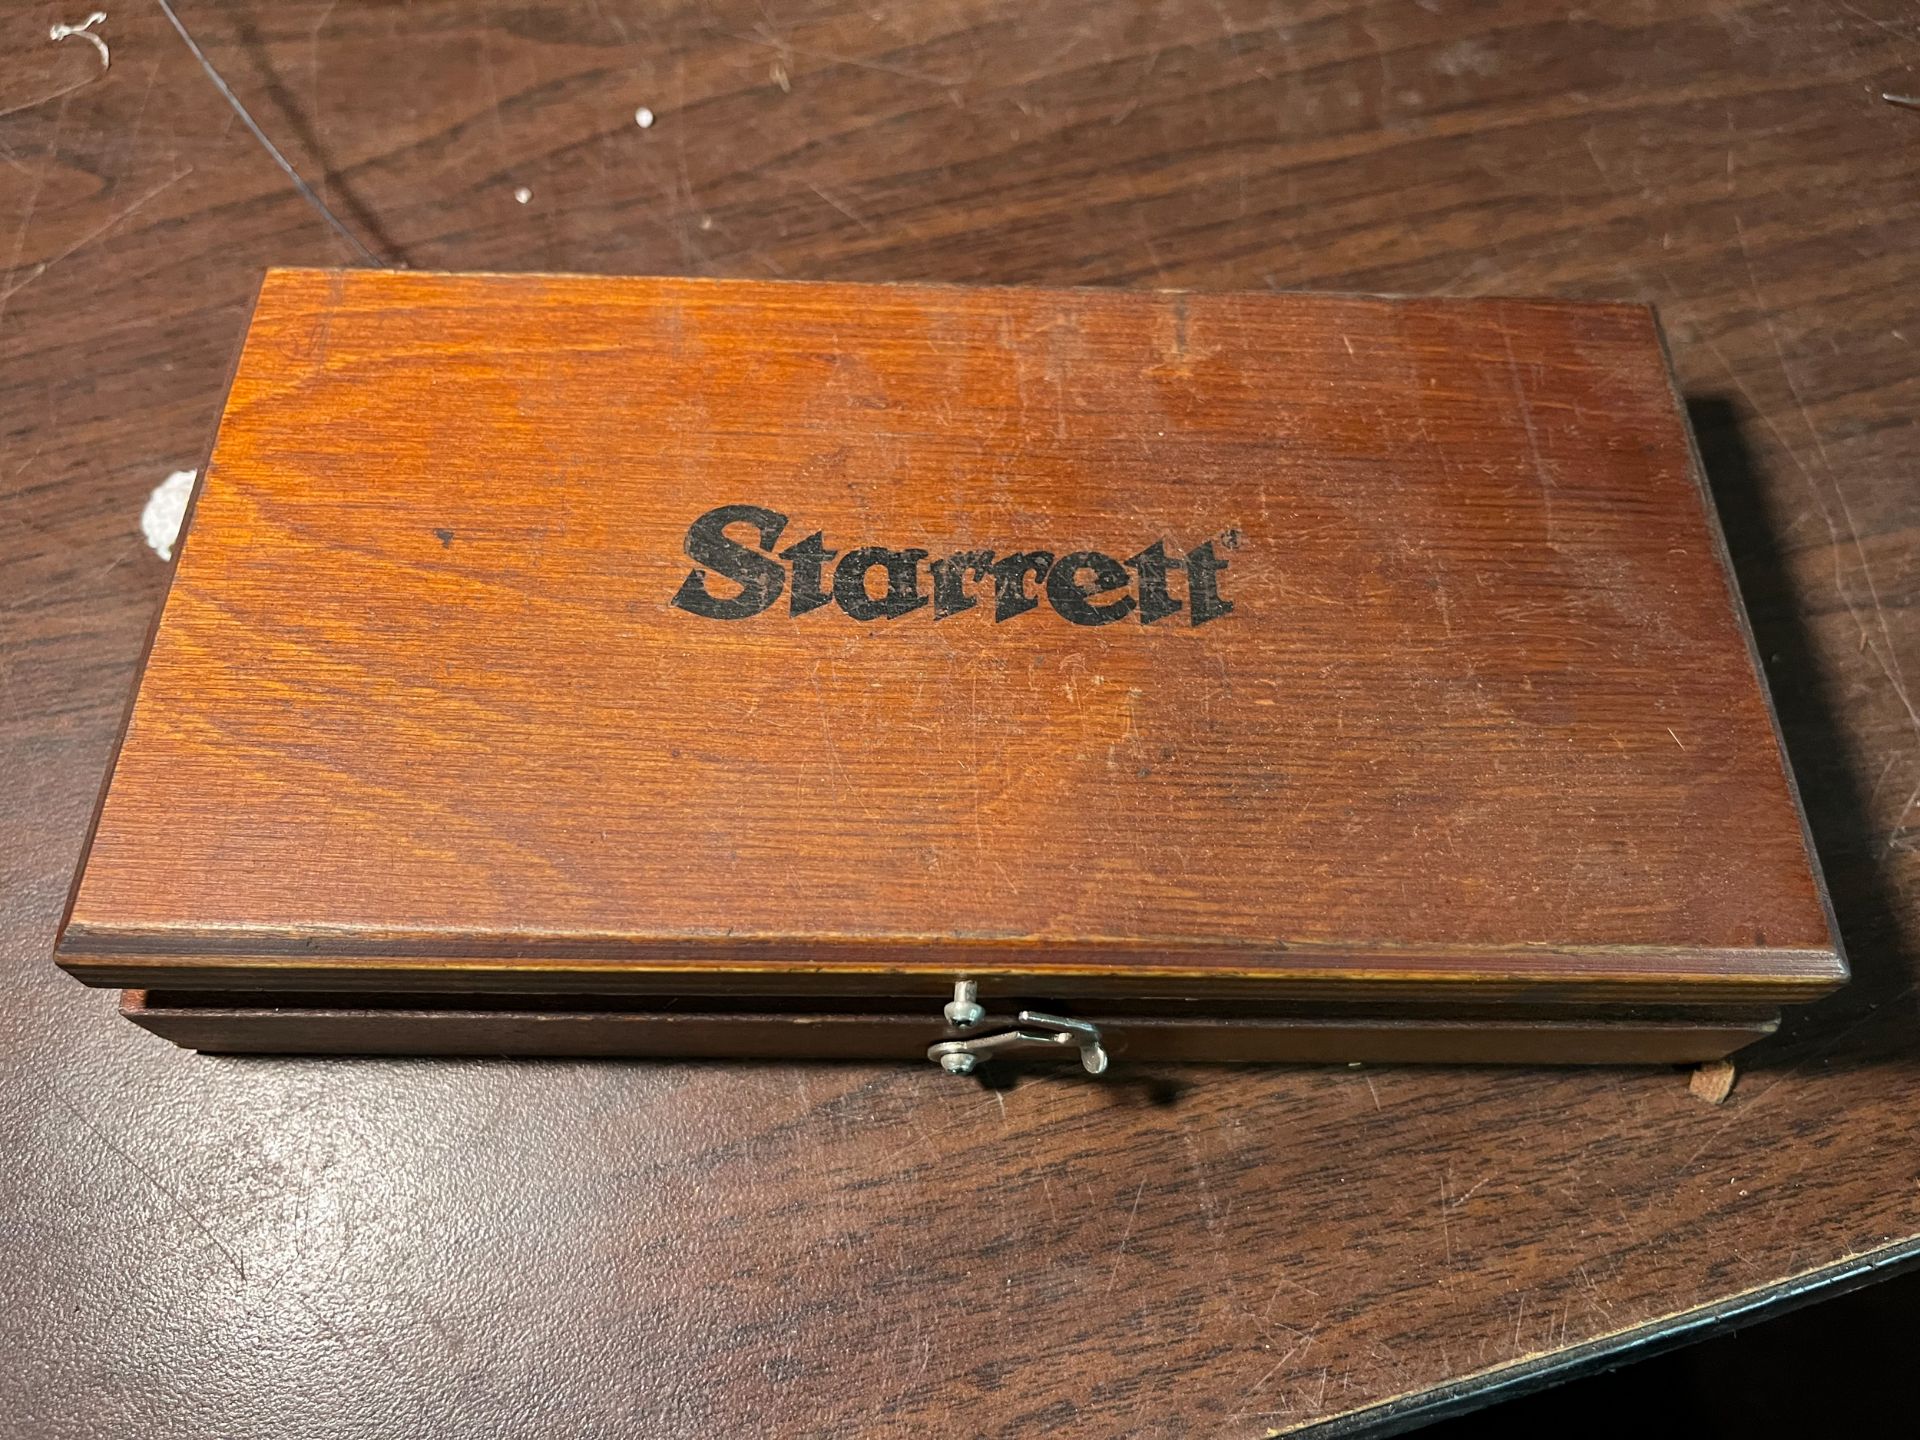 Starrett- Micrometer - Image 2 of 2